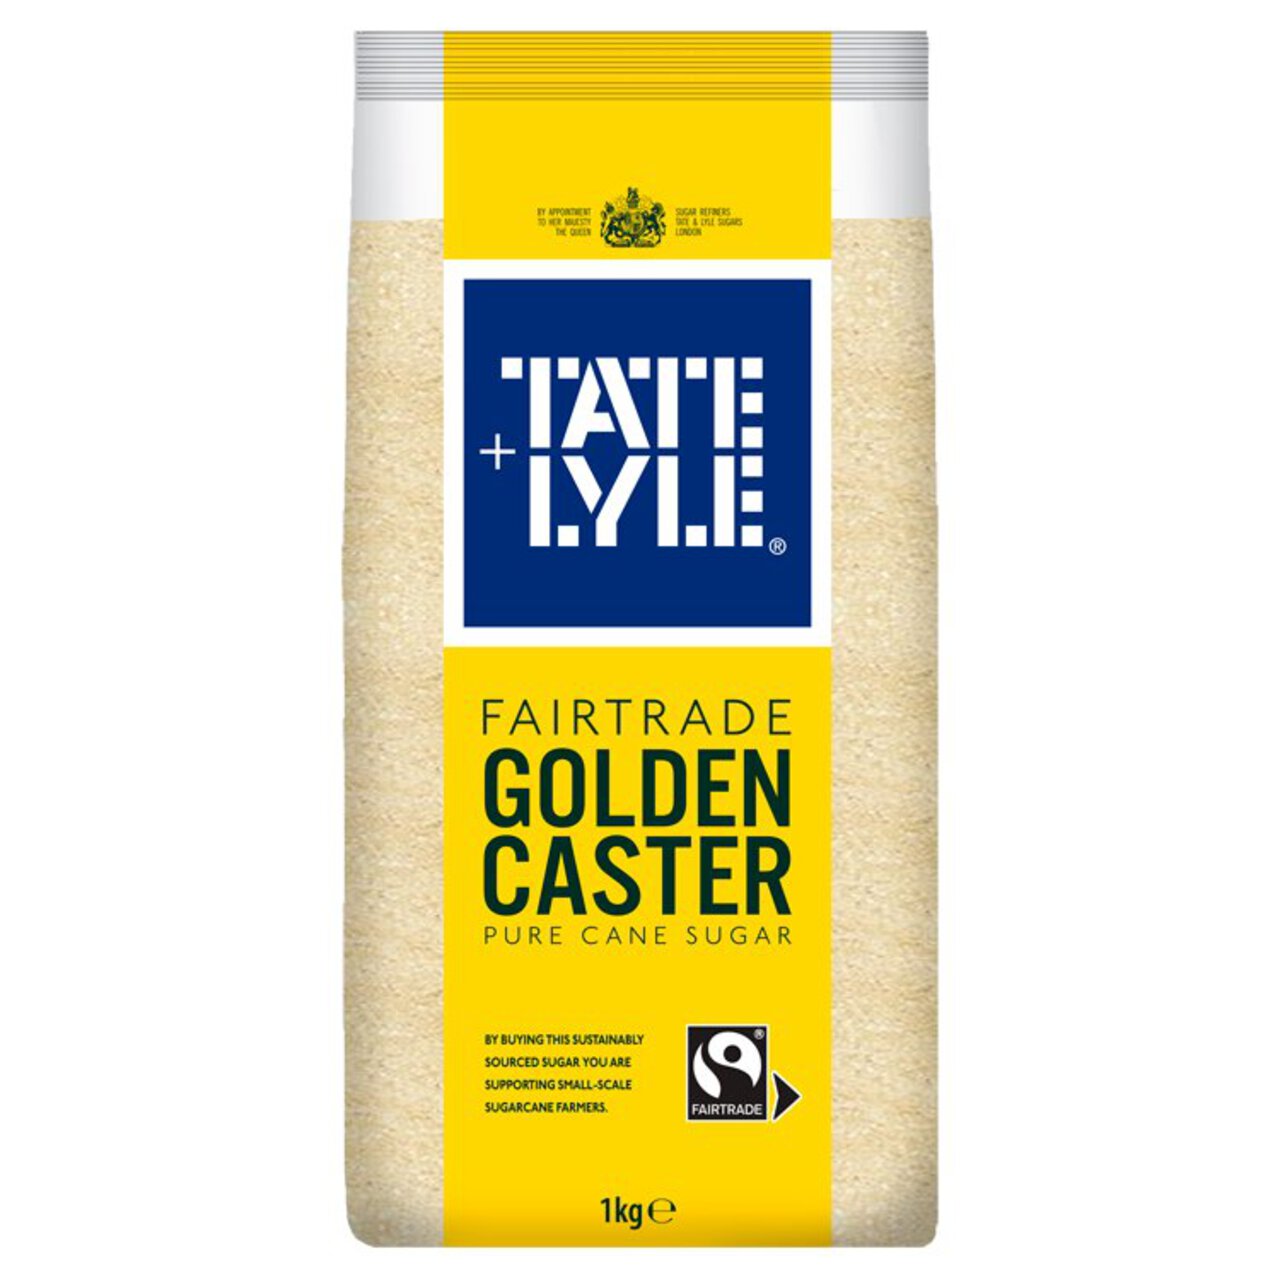 Tate & Lyle Fairtrade Golden Caster 1kg